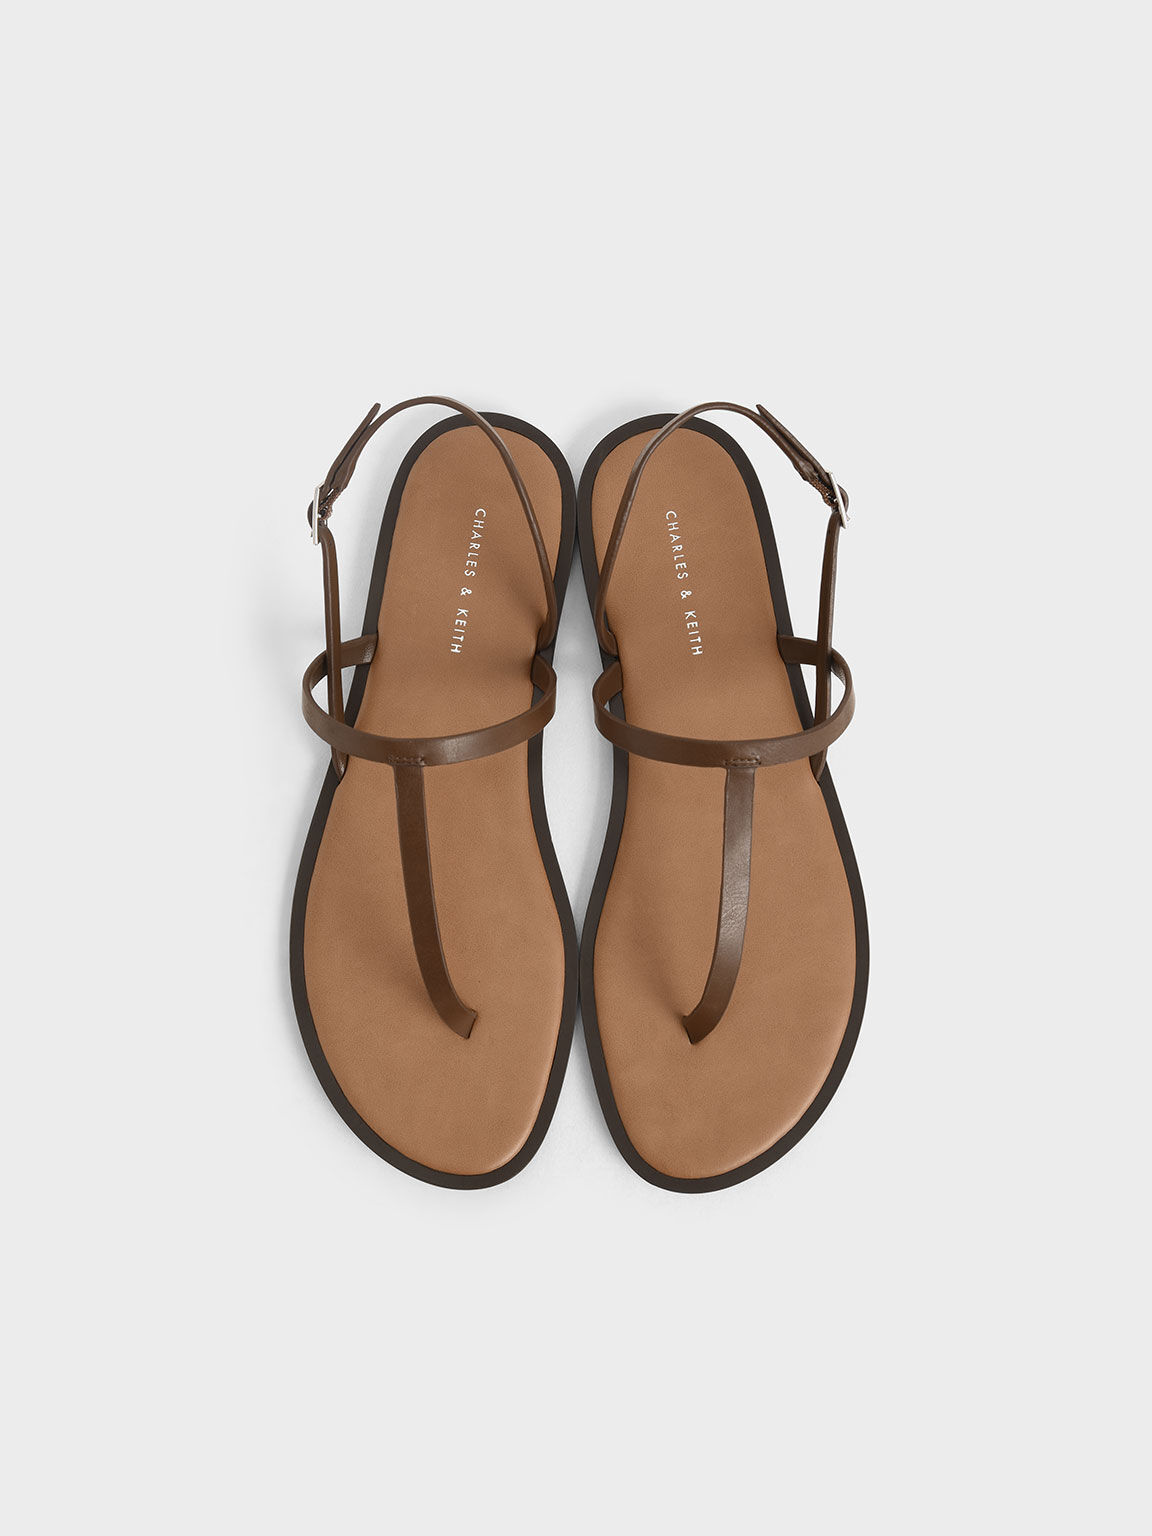 T-Bar Slingback Sandals, Brown, hi-res